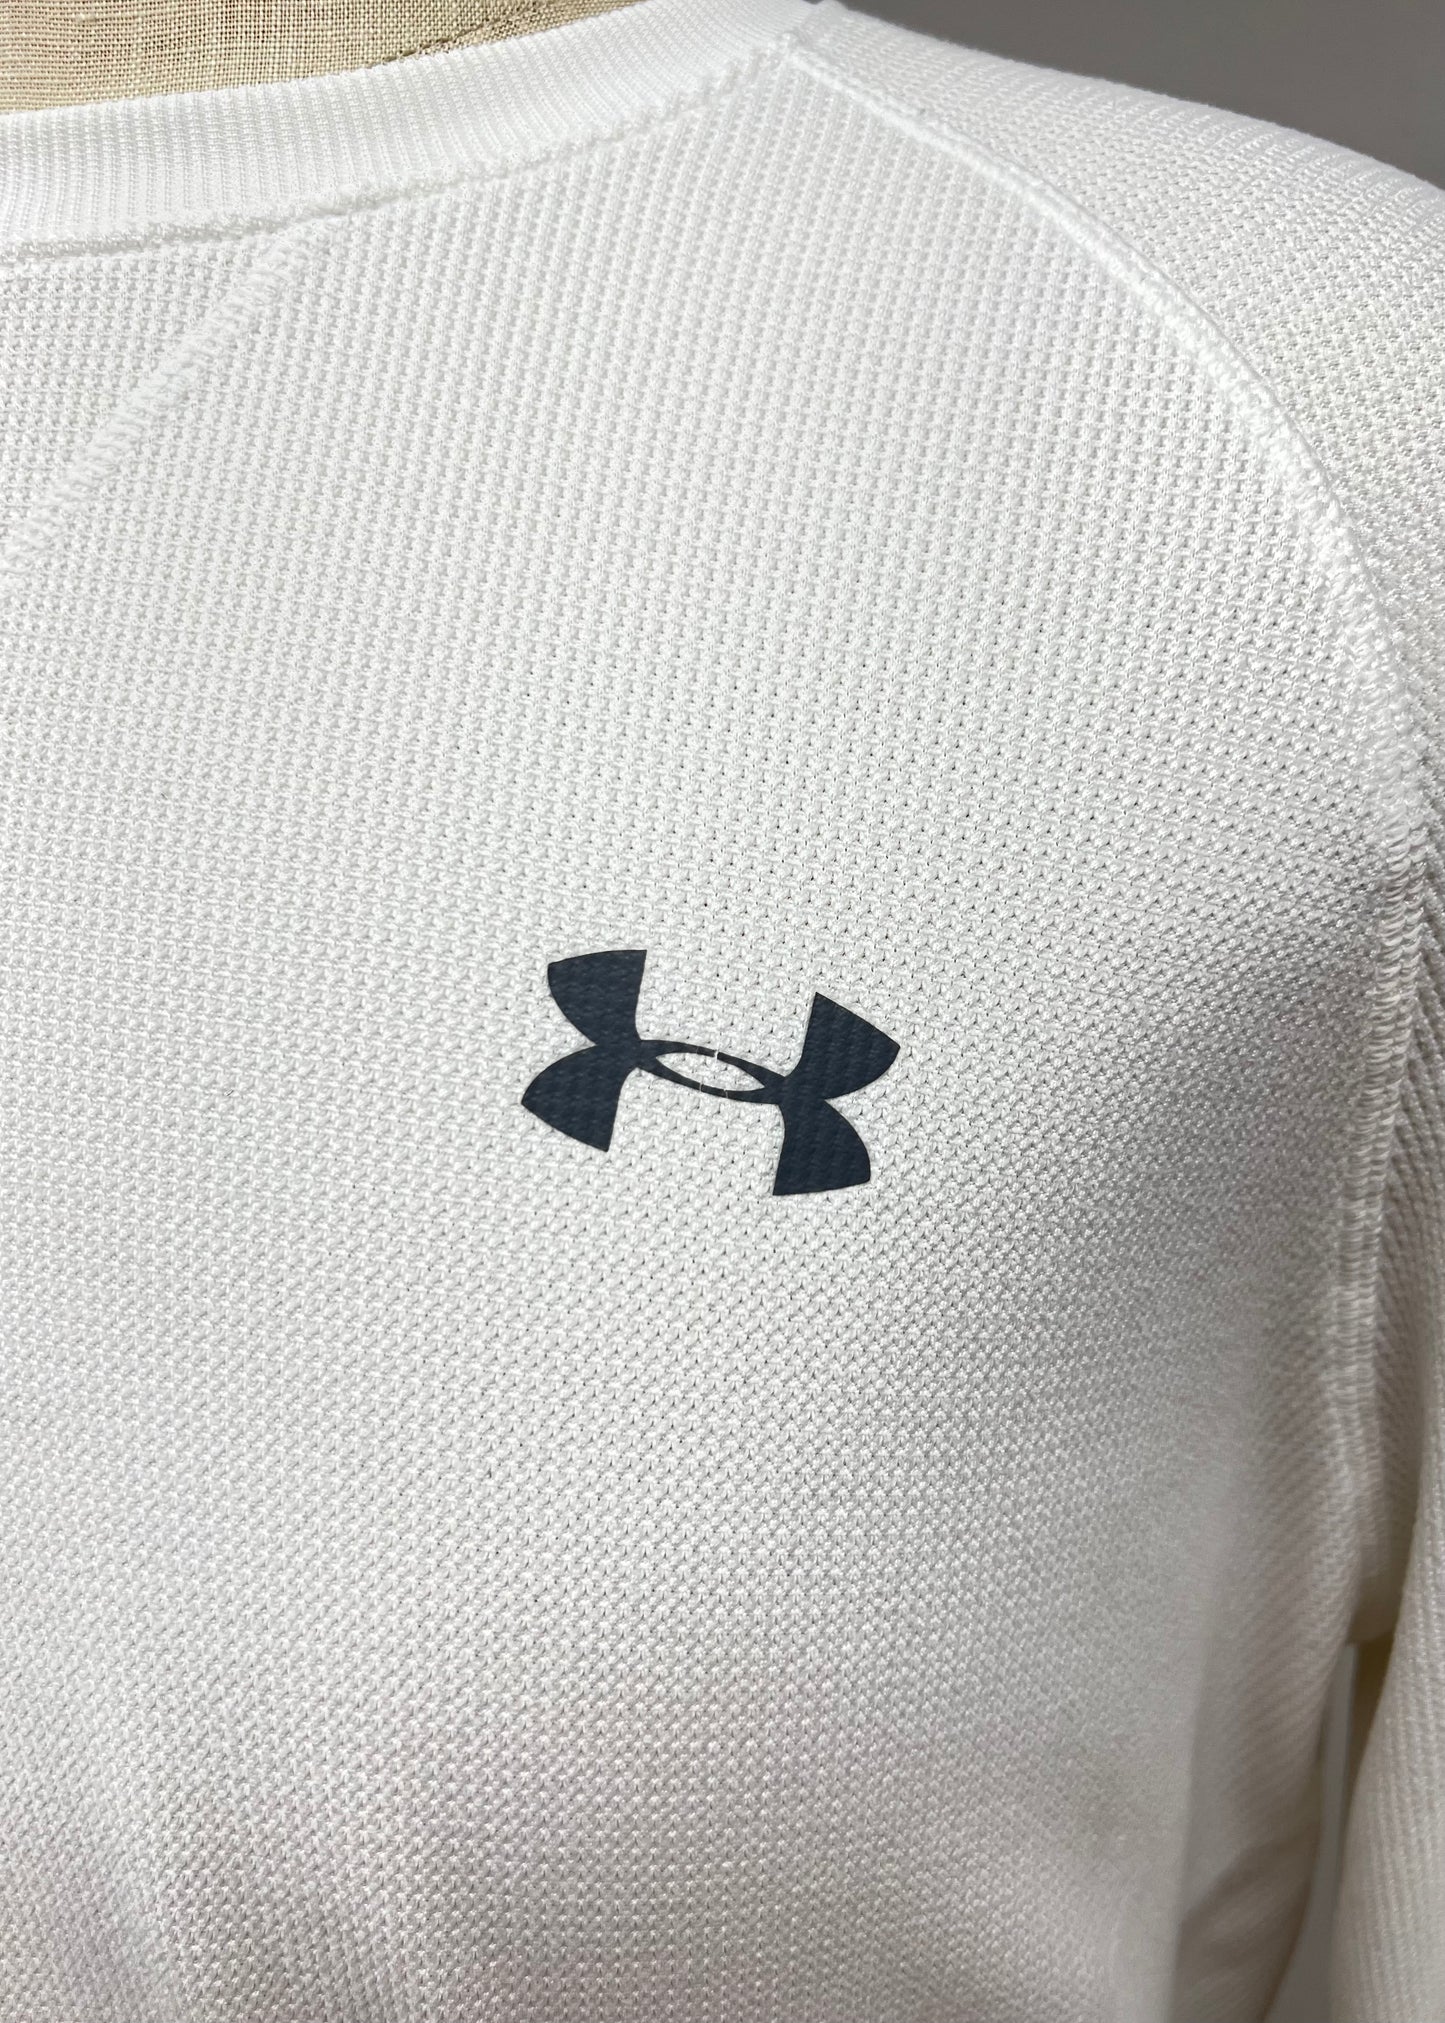 Camiseta cuello redondo Under Armour 🏋🏽 color blanco Talla L Entalle Regular